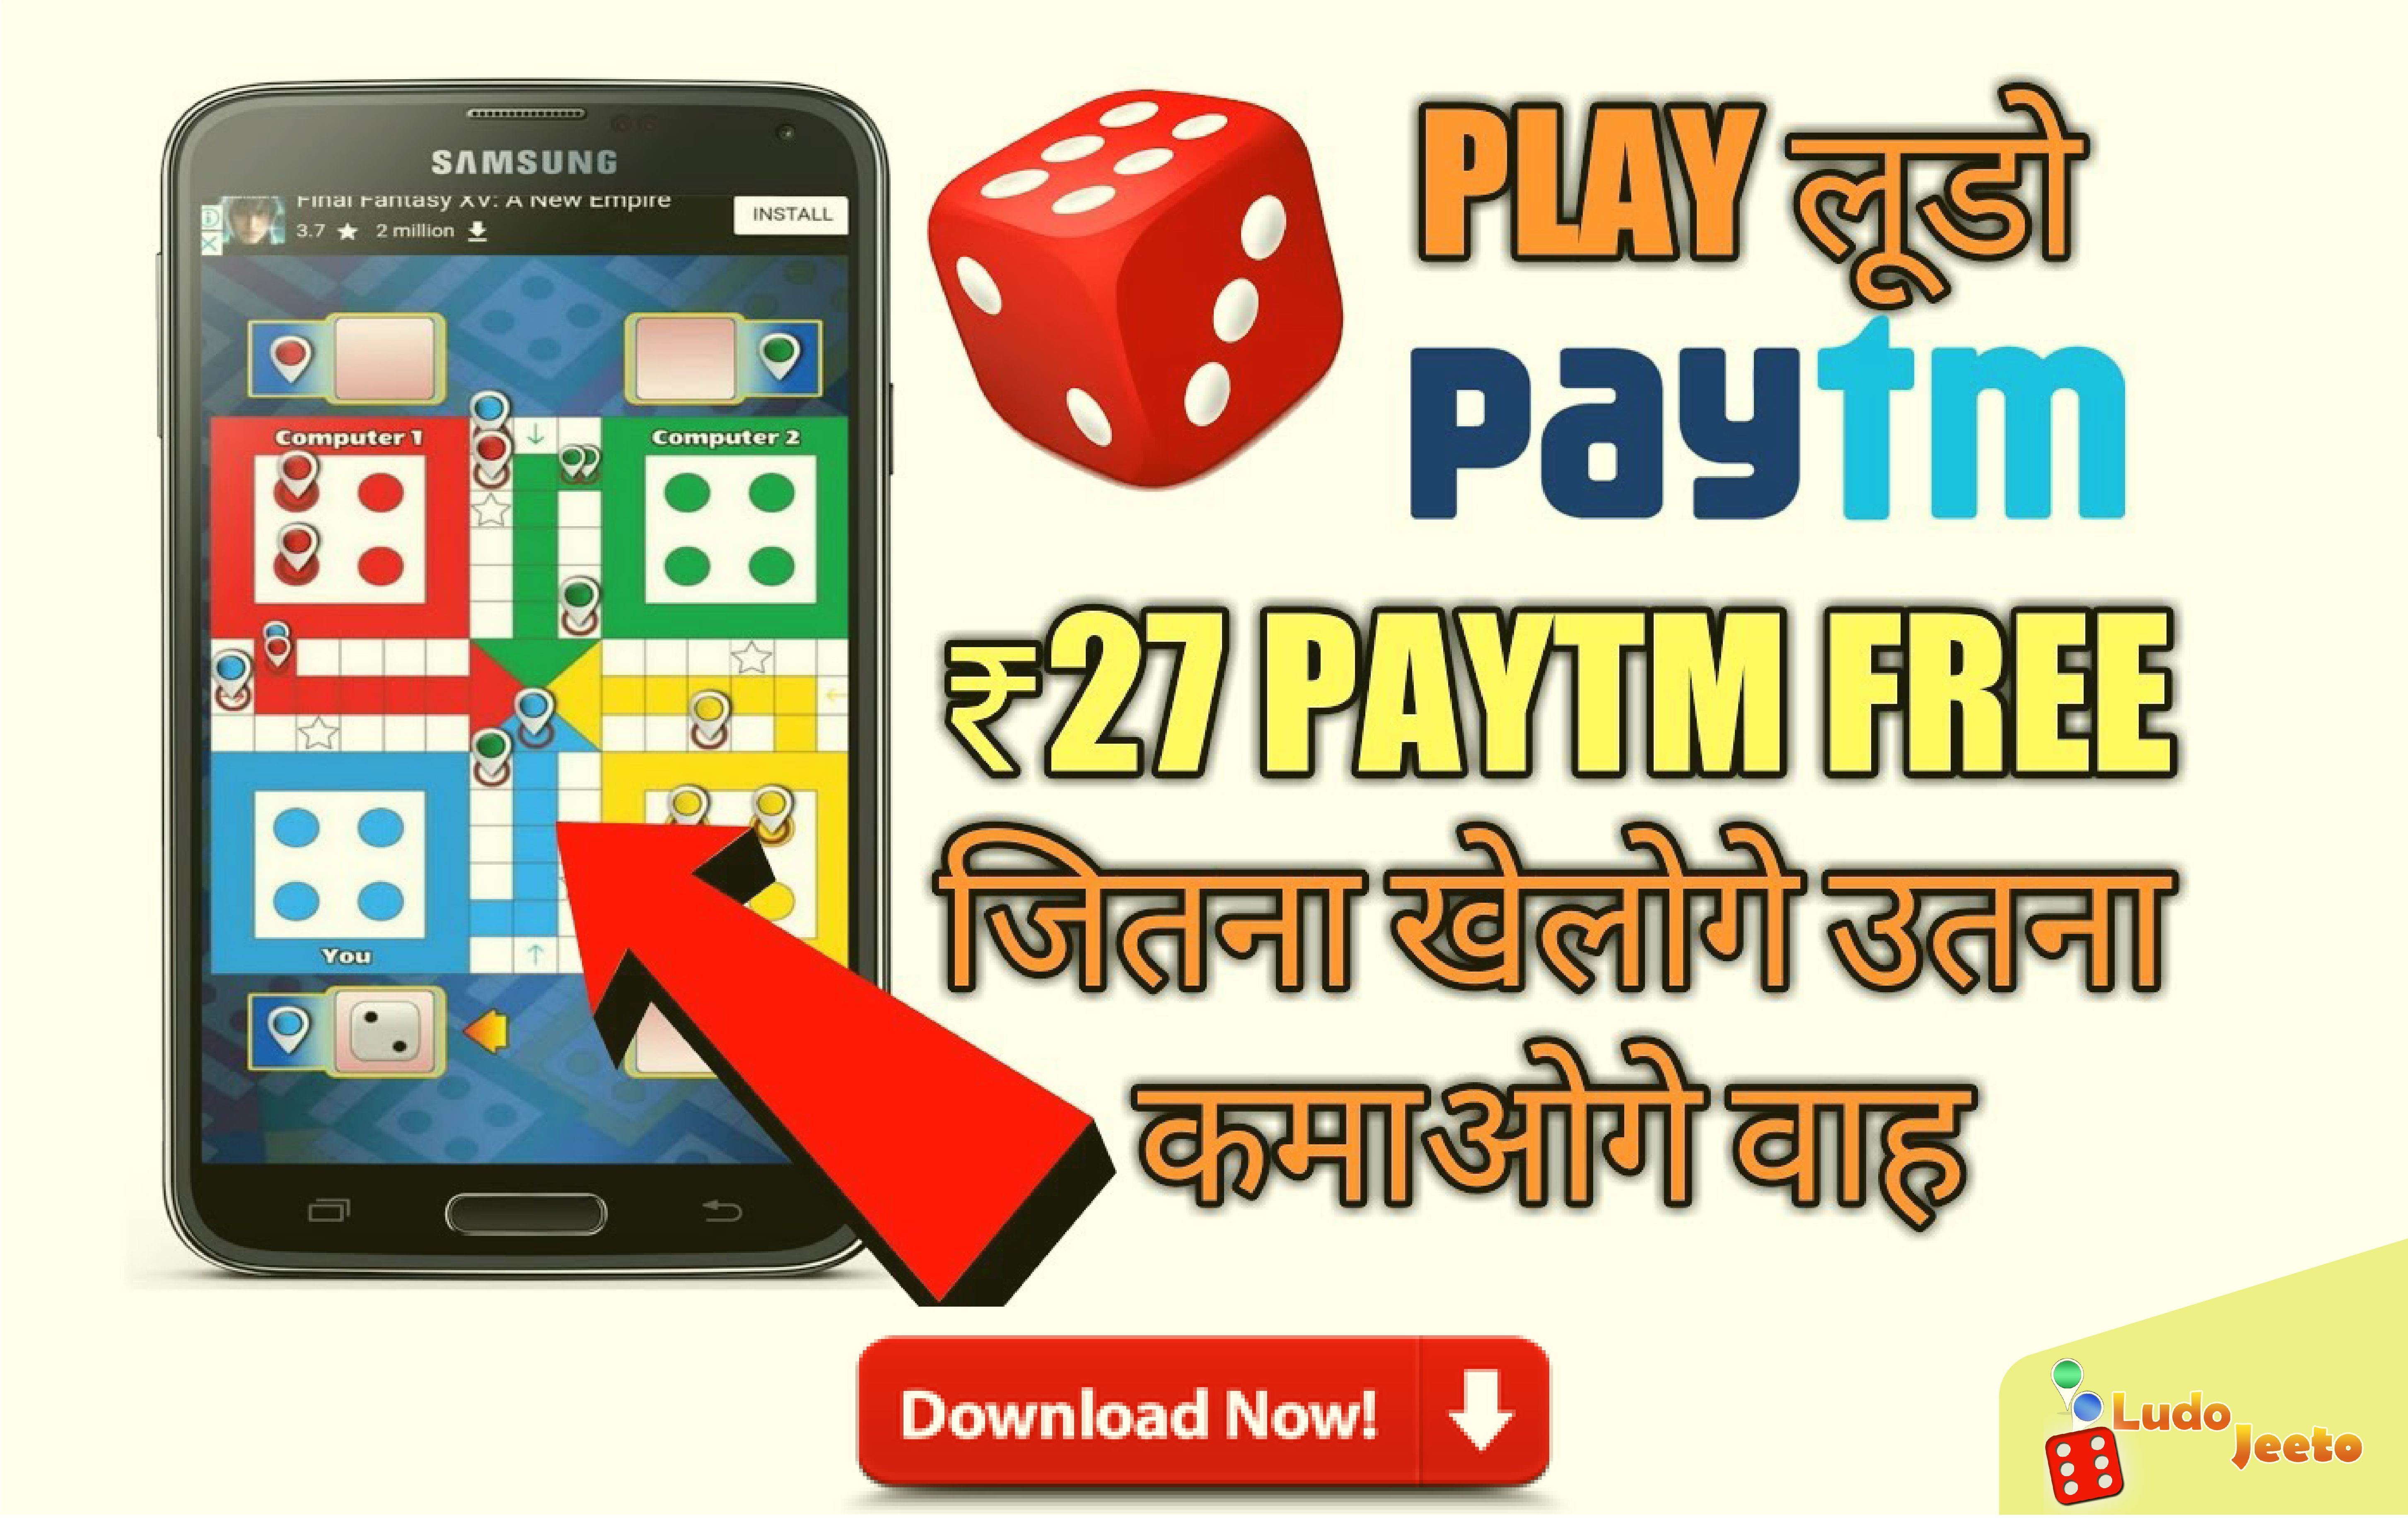 Play games earn money app